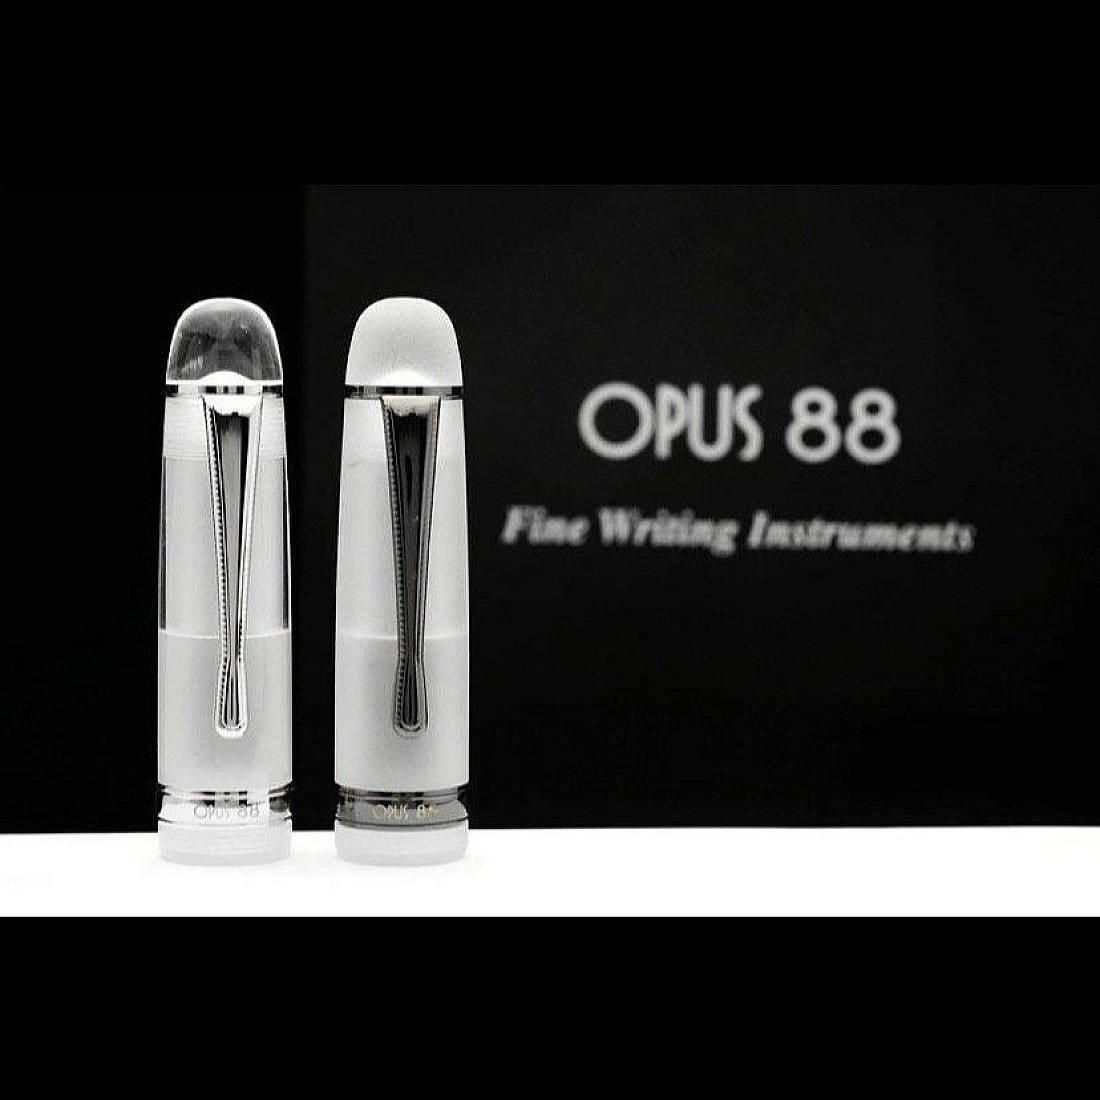 Opus 88 Jazz Clear Fountain pen